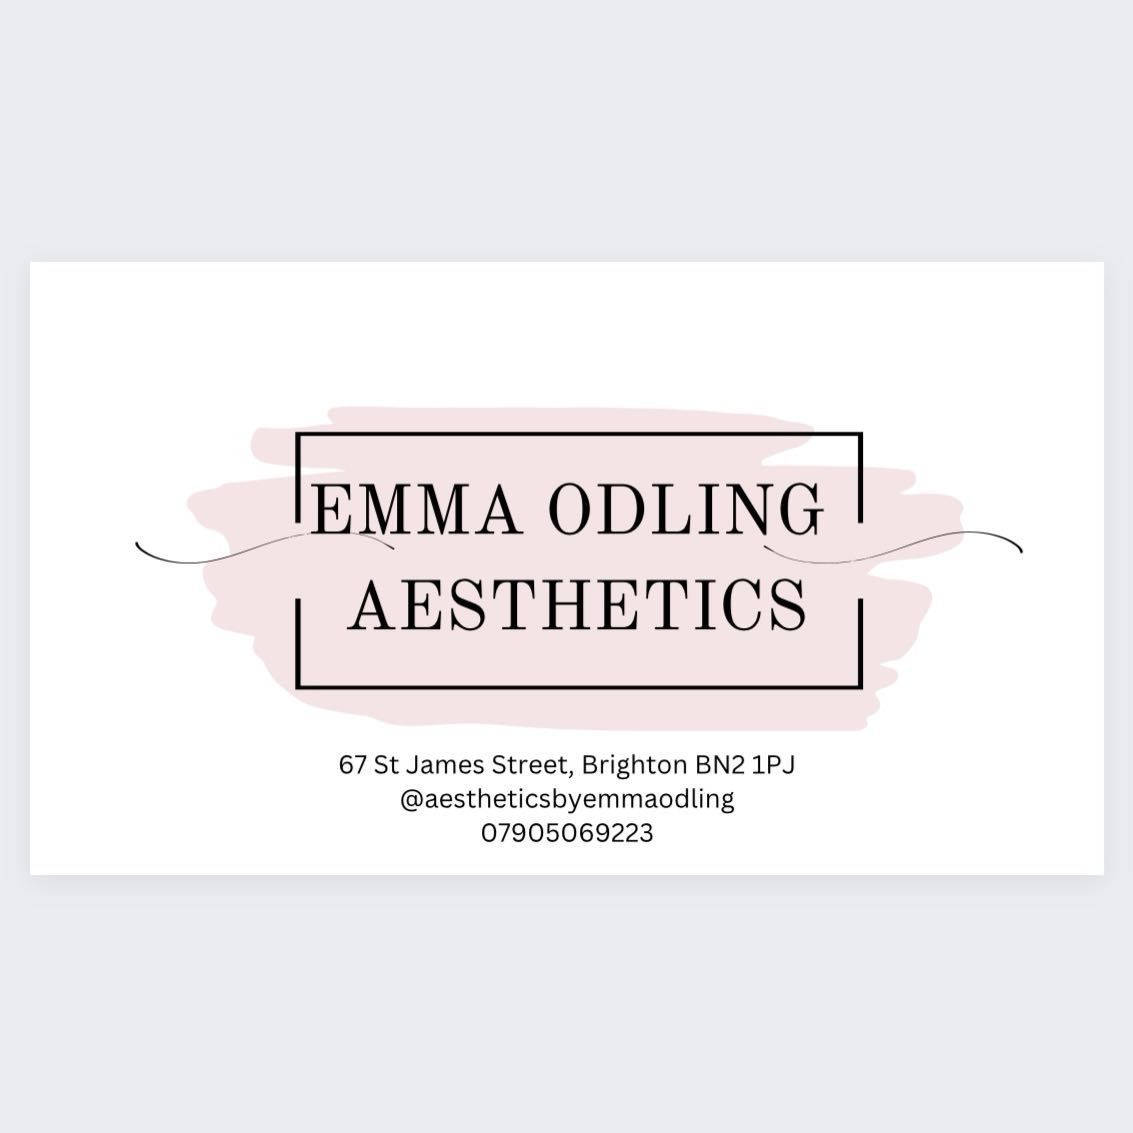 Emma odling aesthetics, 67 St James's Street, BN2 1LG, Brighton